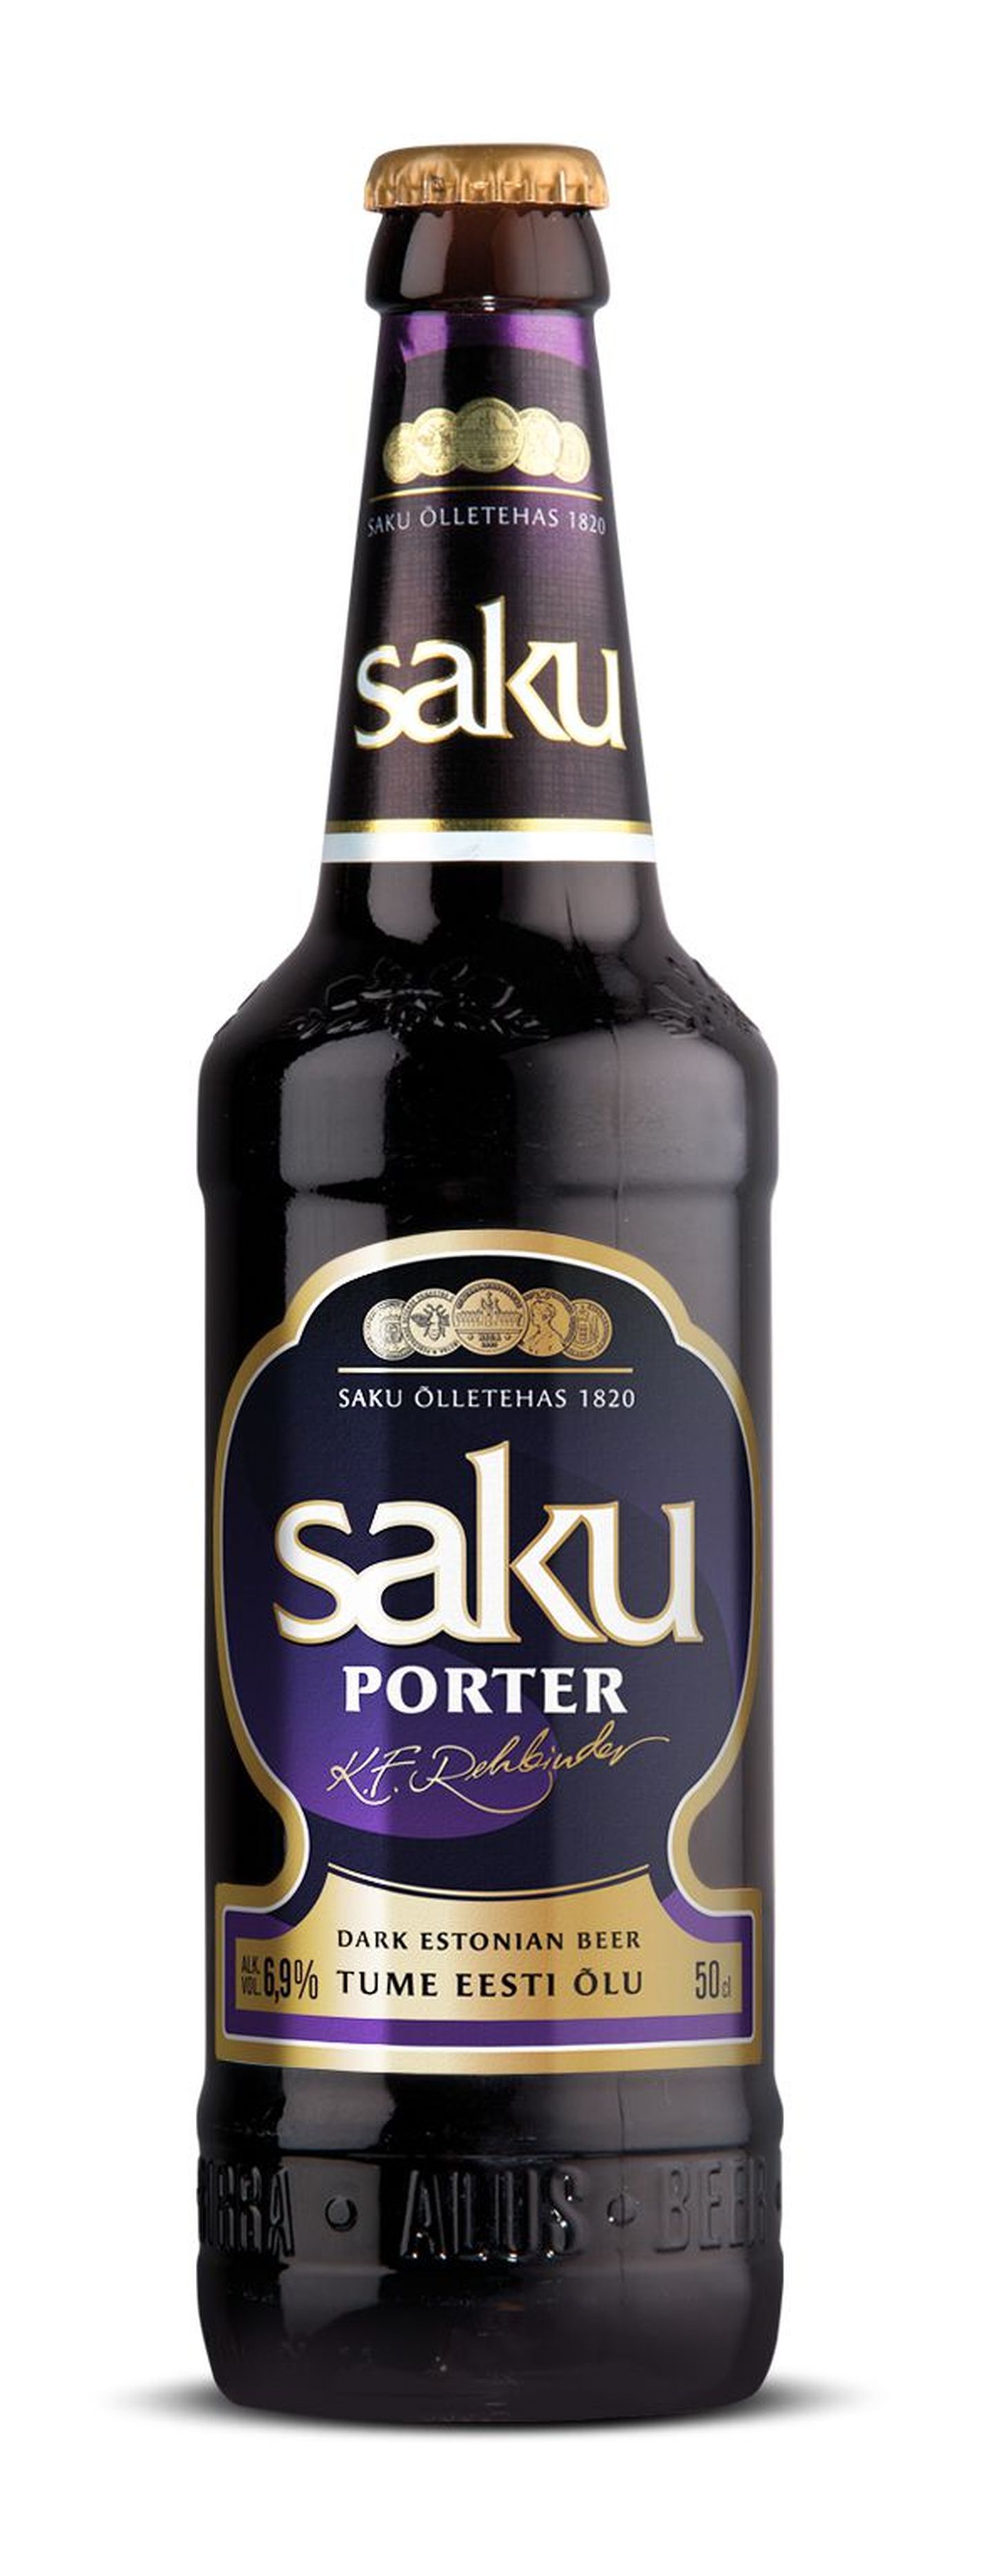 Saku Porter valiti maailma parimaks kangeks porteriks.